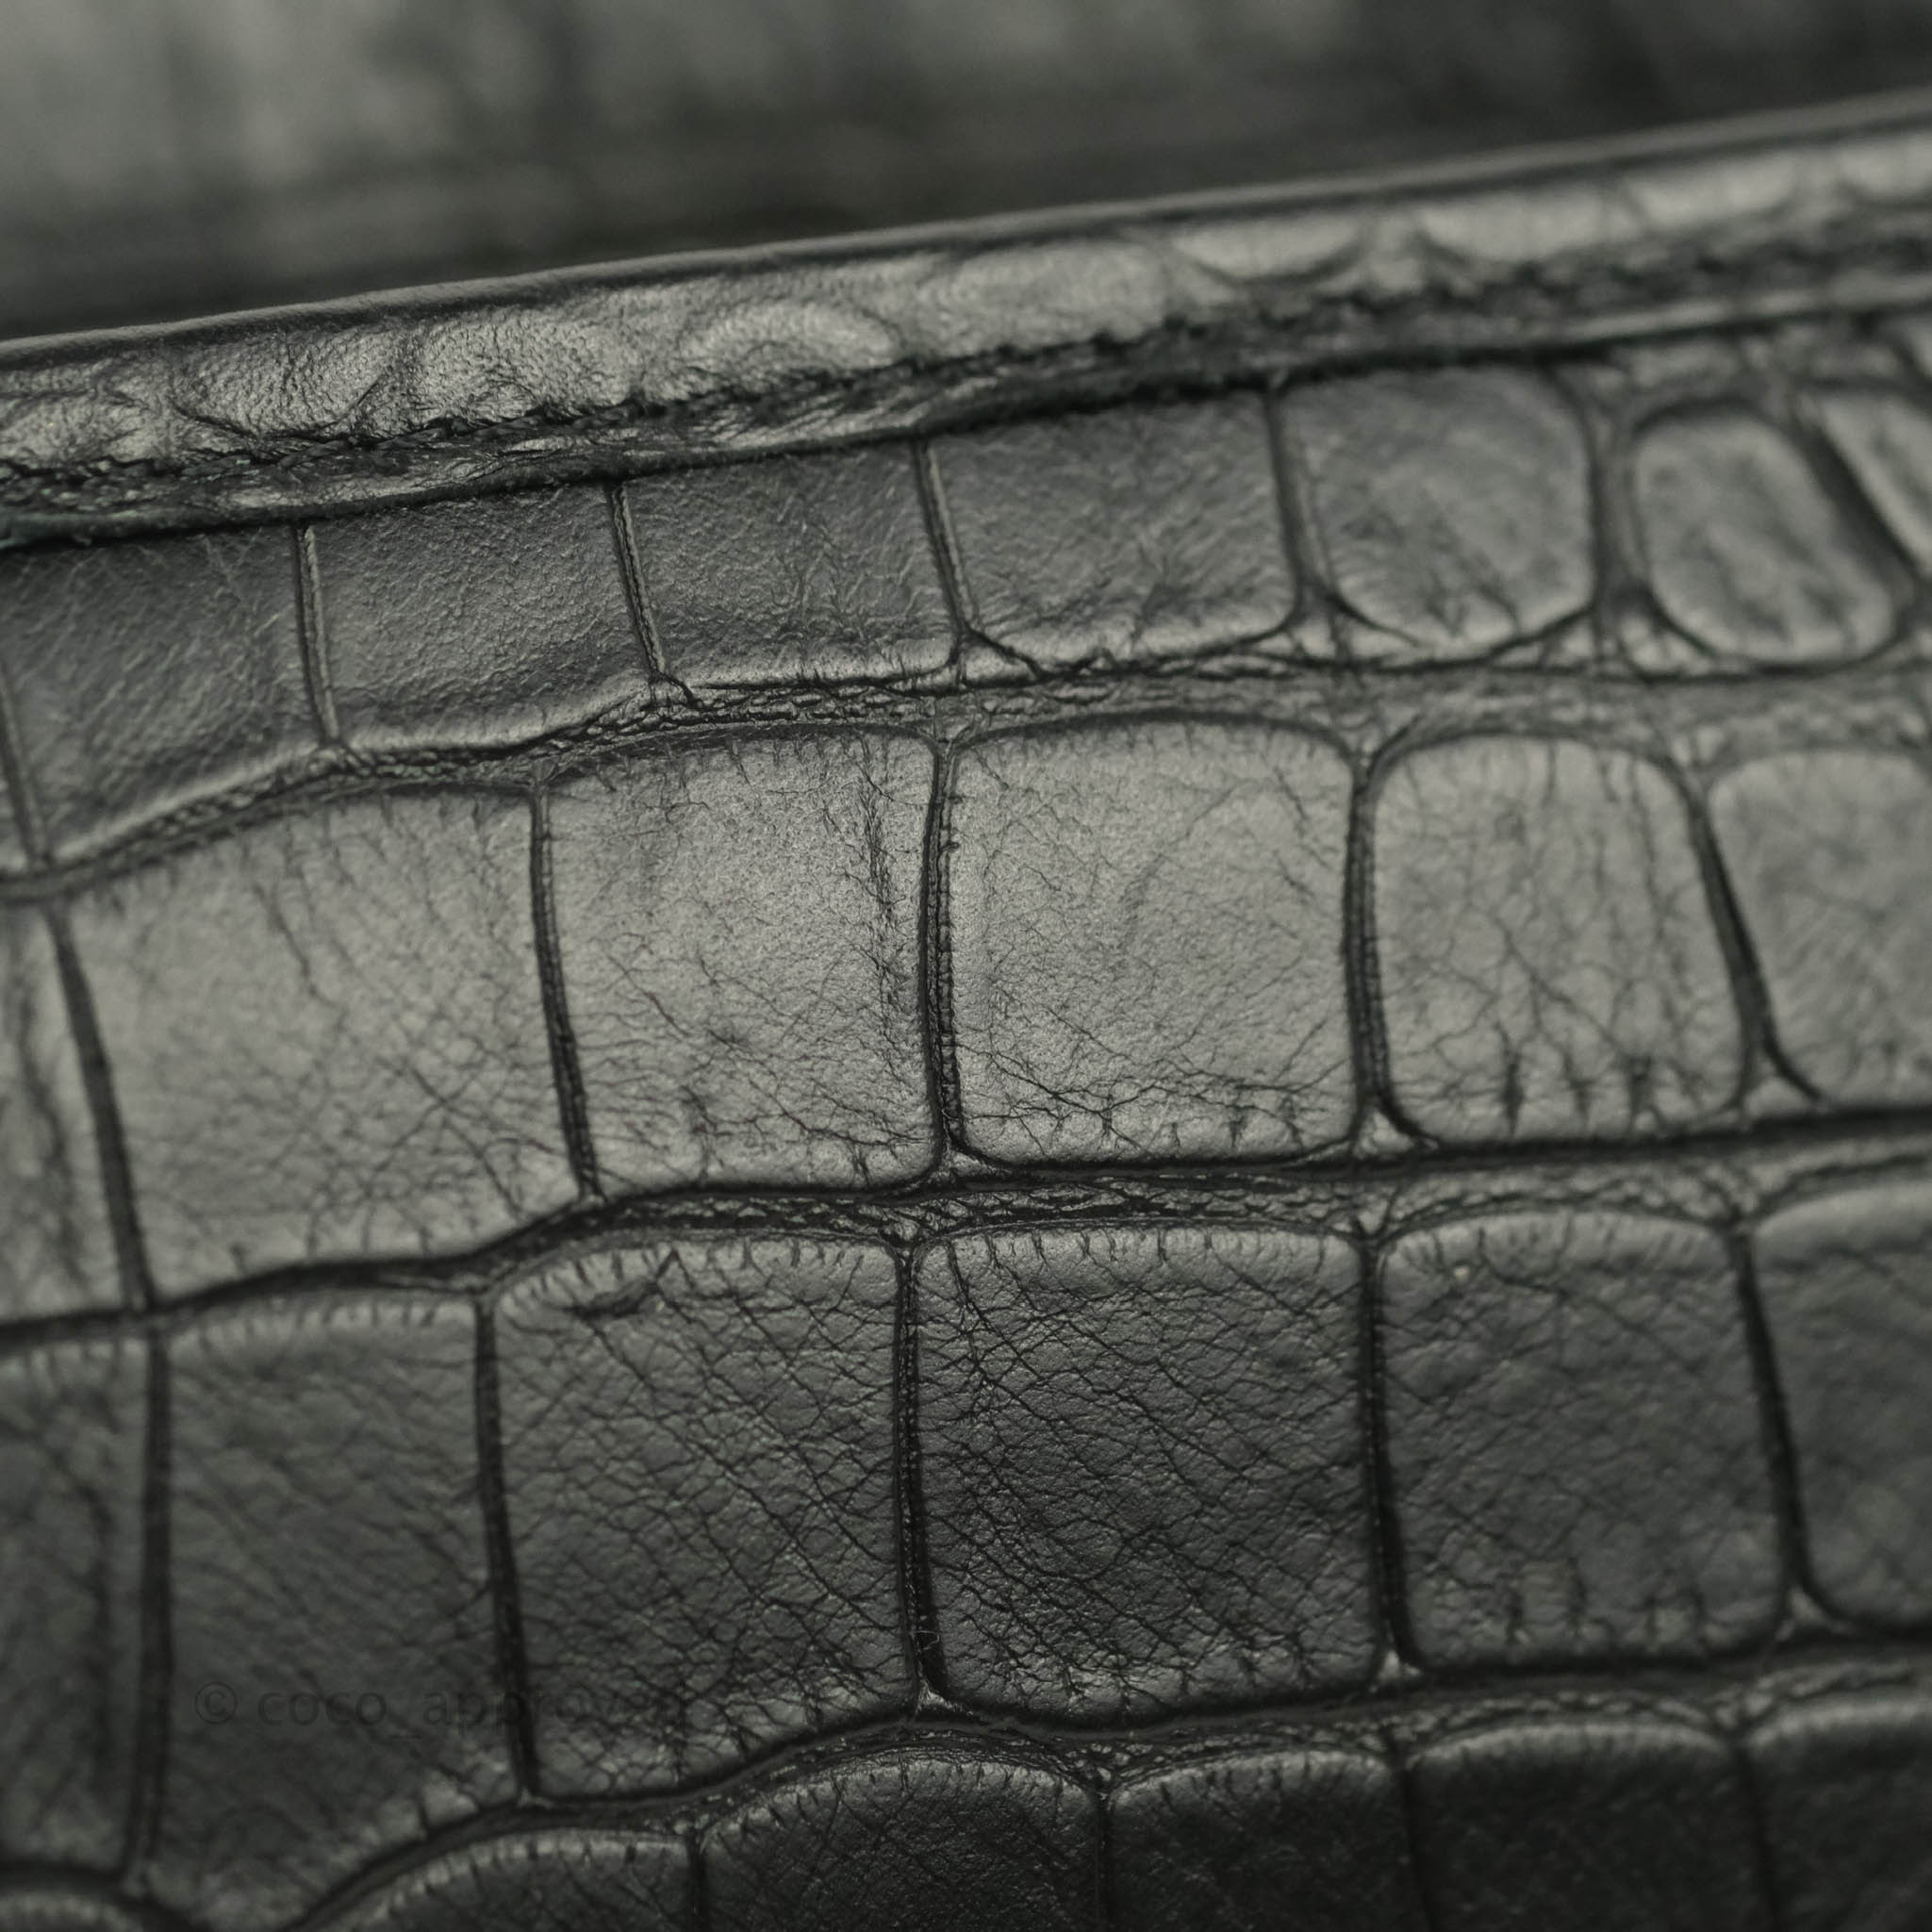 Chanel Large Gabrielle Hobo Crocodile Embossed Black Calfskin